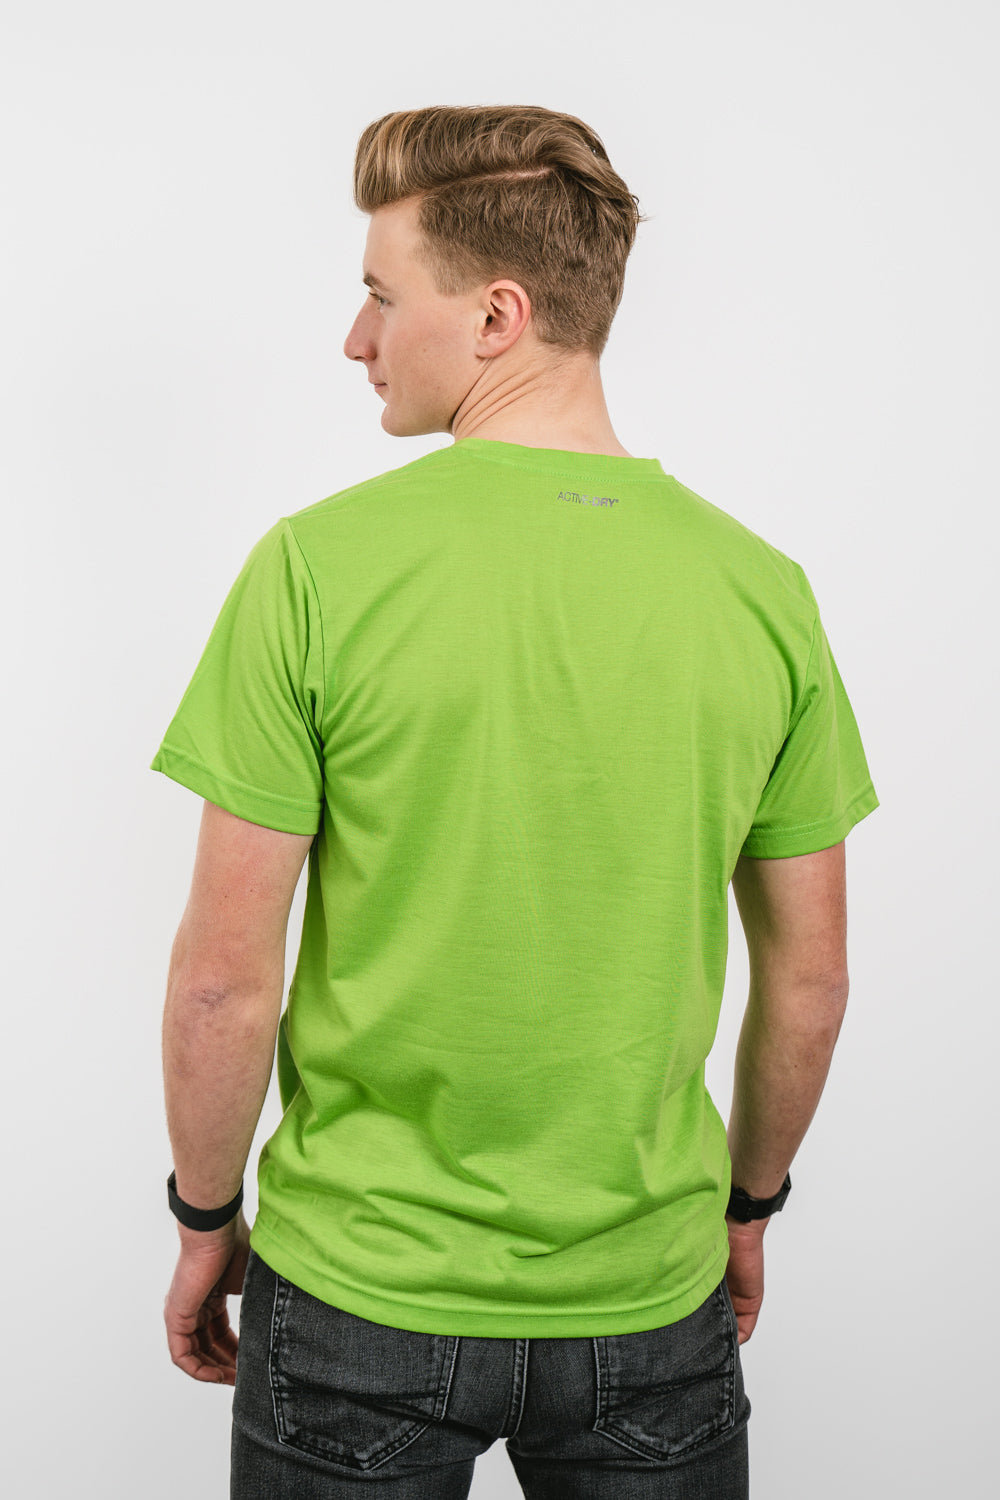 Outdooractive Pro+-T-Shirt grün -Herren